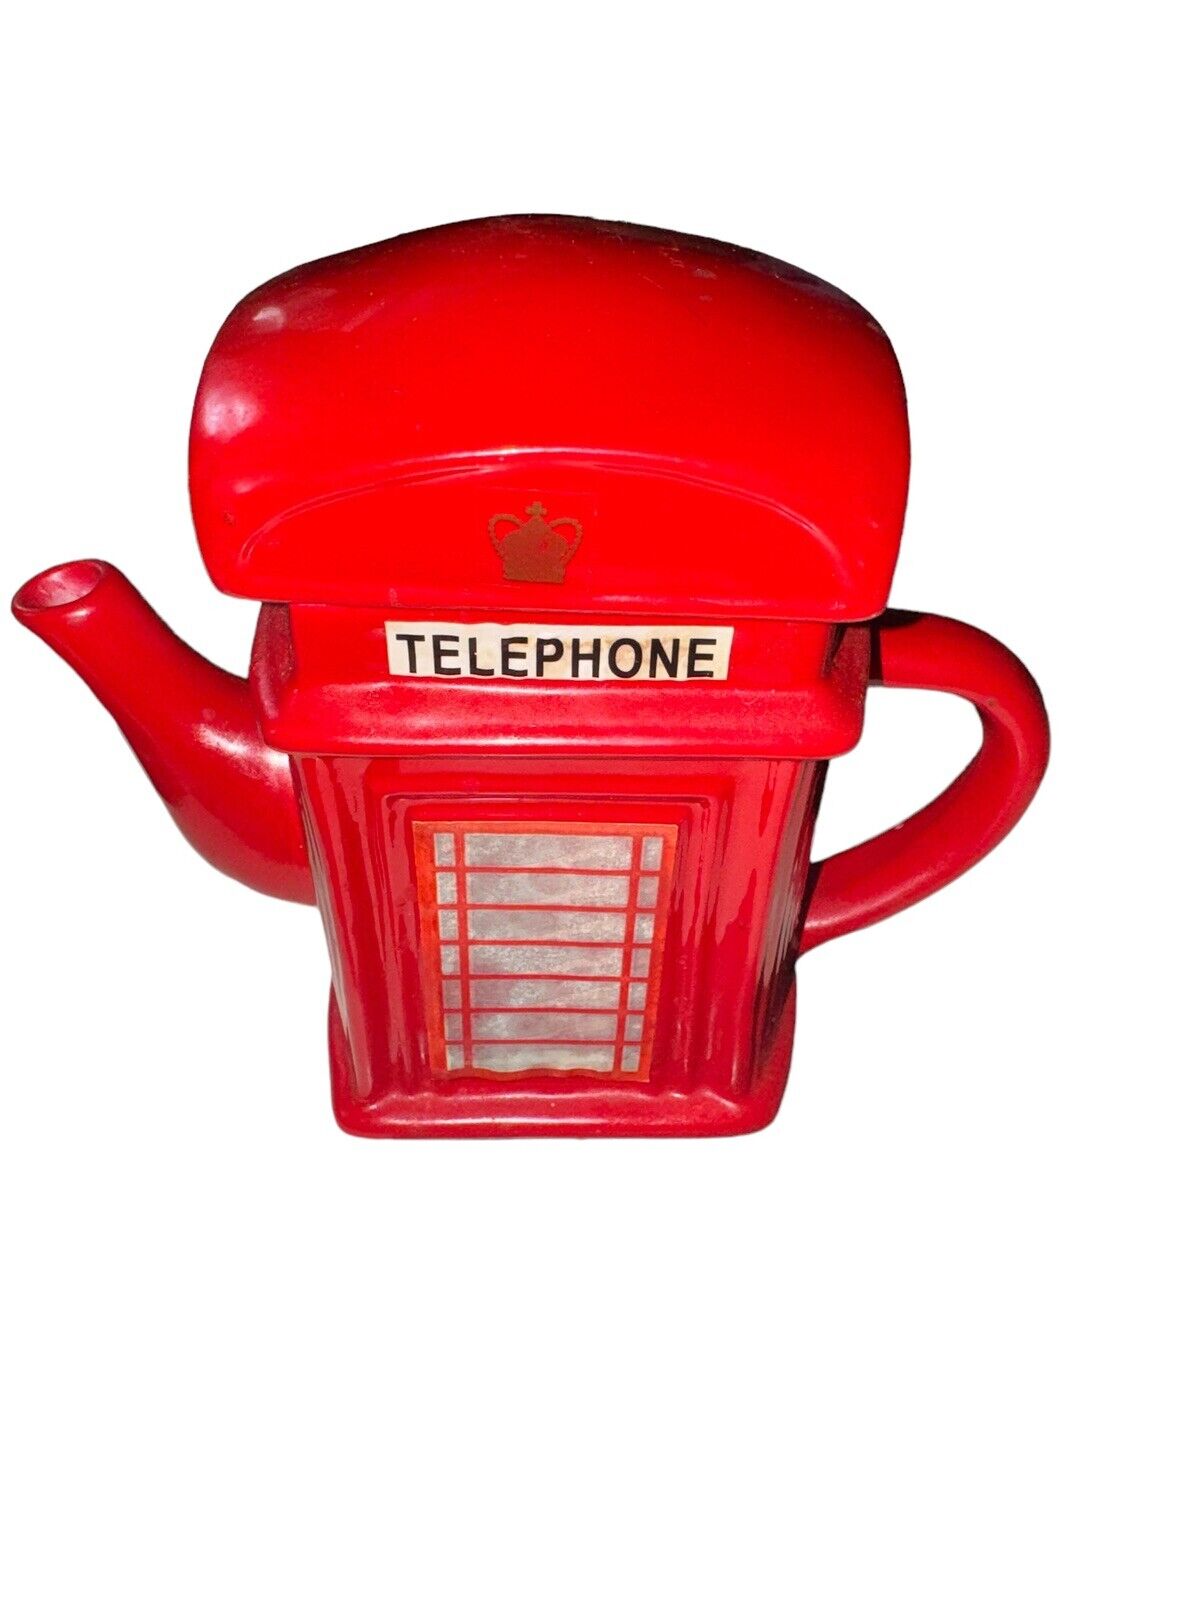 Vintage Novelty EPL Telephone Box Teapot Collectible Ceramic